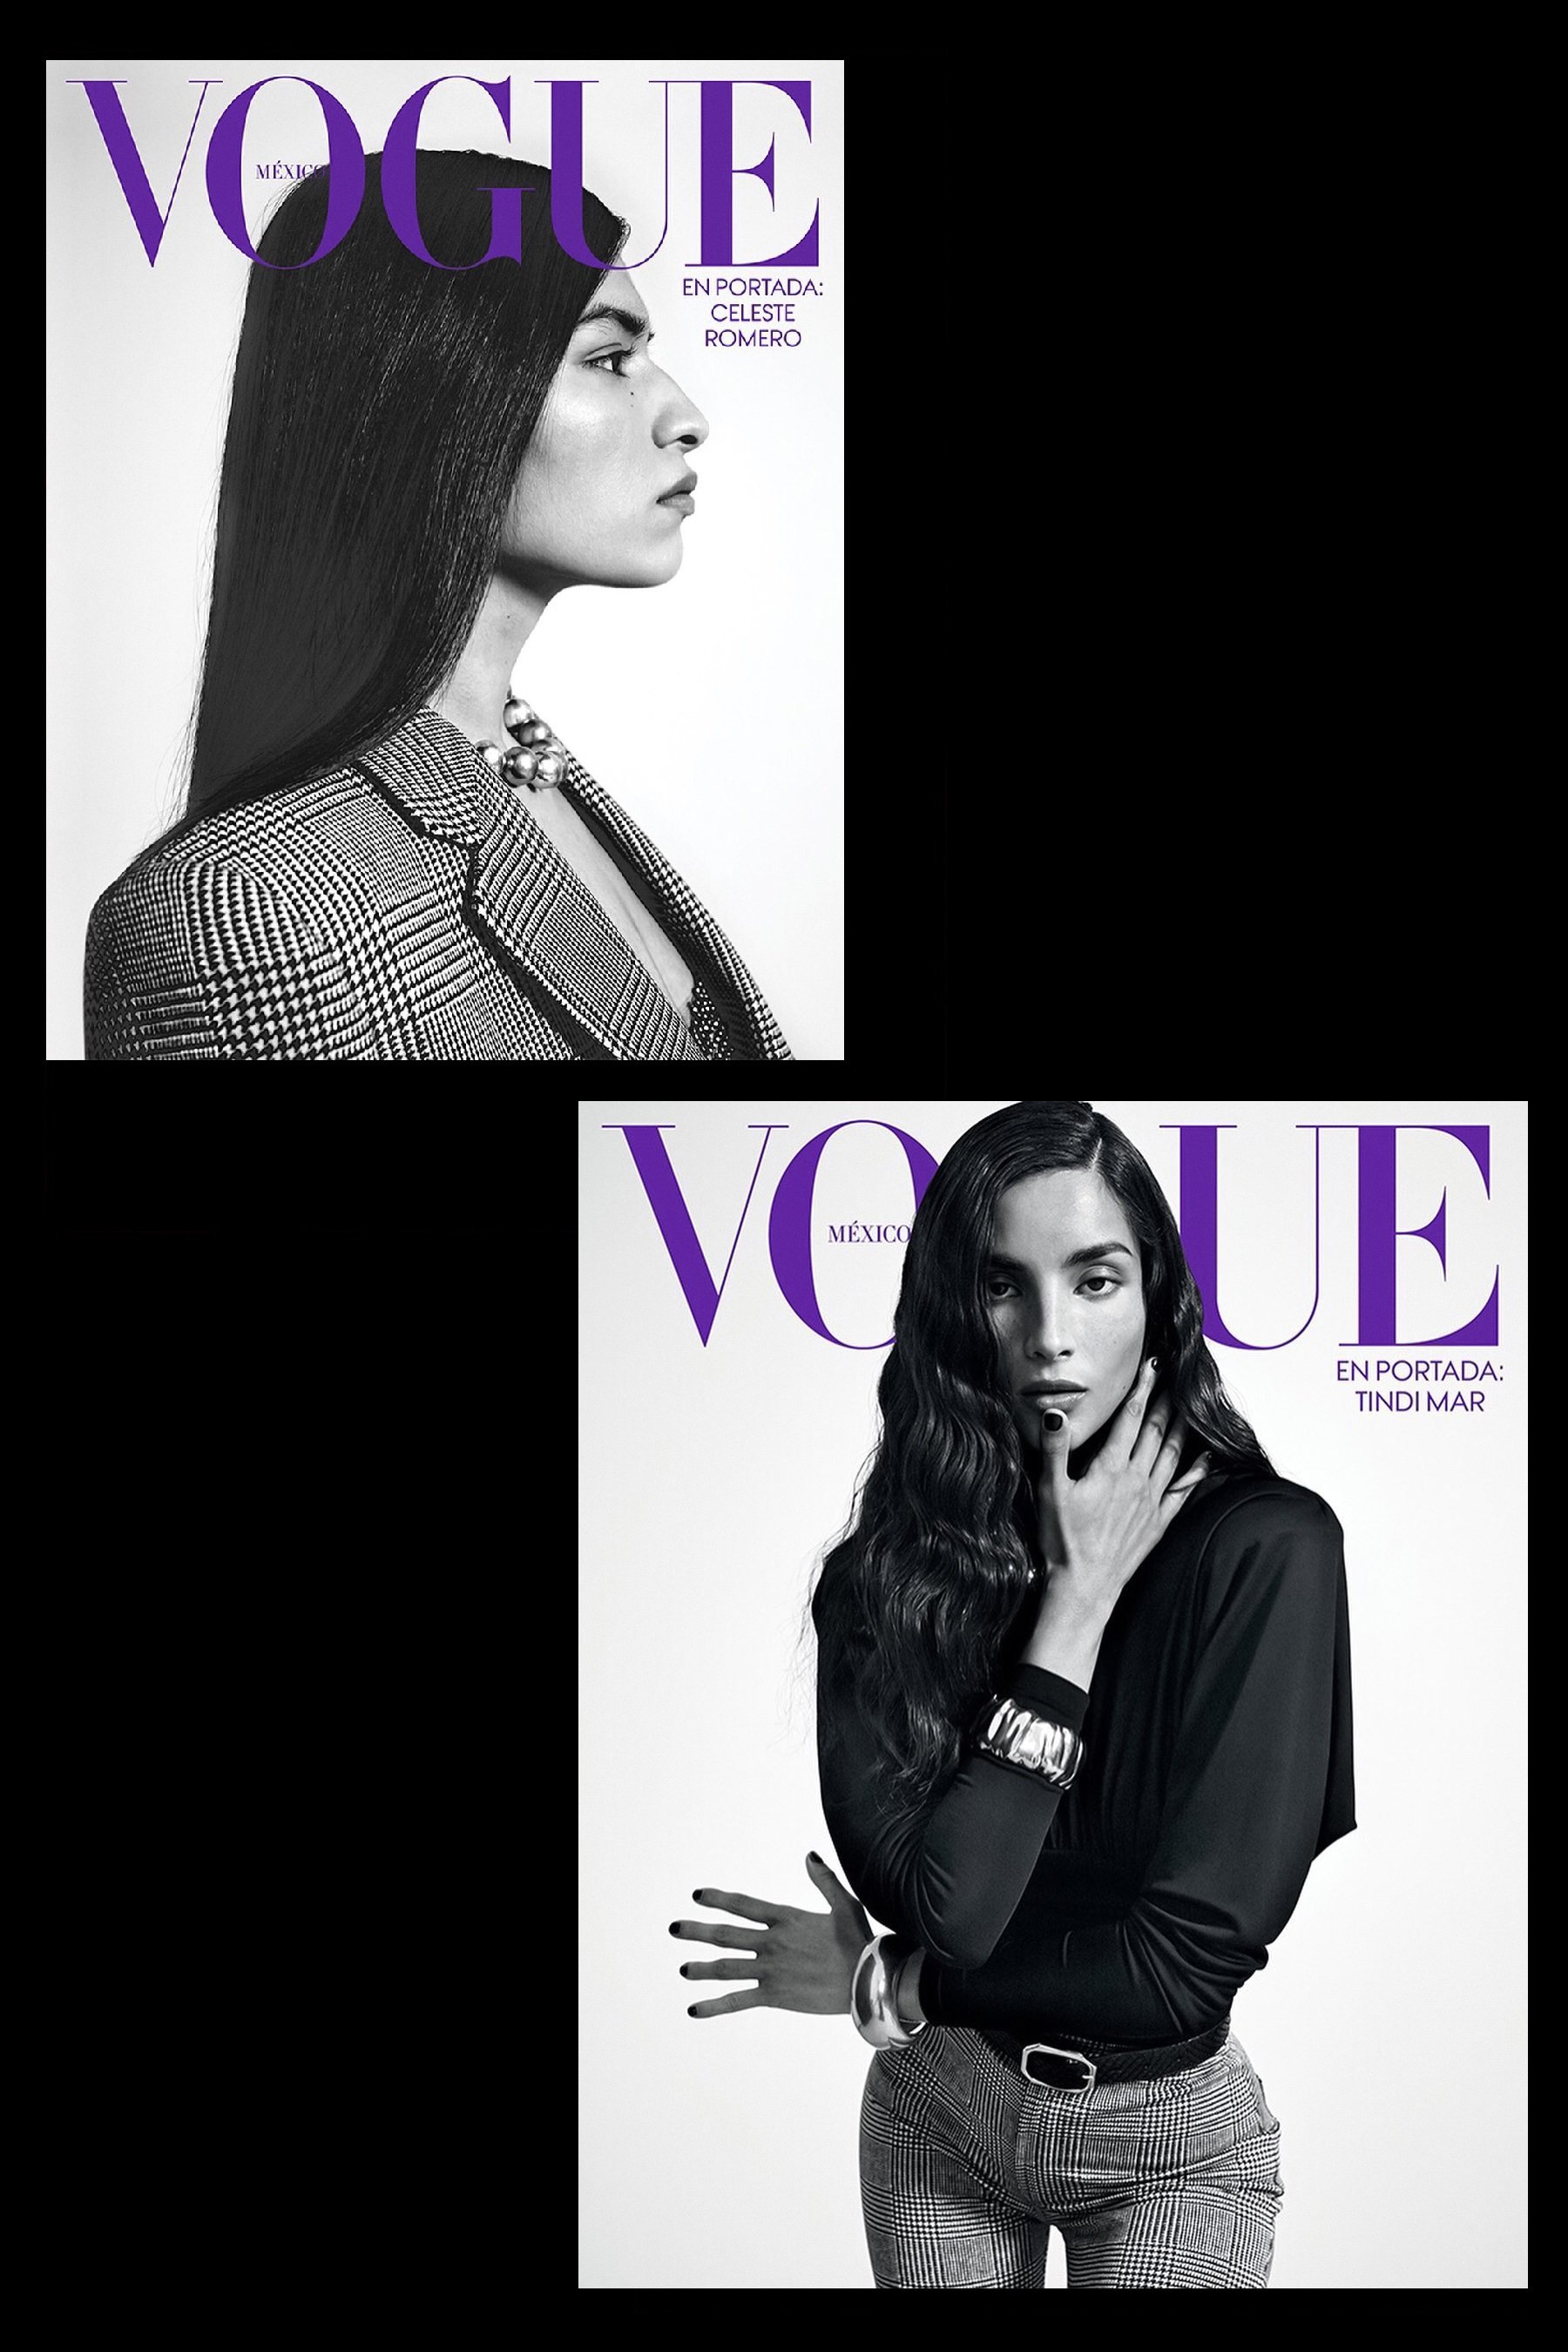 Emma-Summerton-Vogue-Mexico-Latin-America Covers-23.jpg